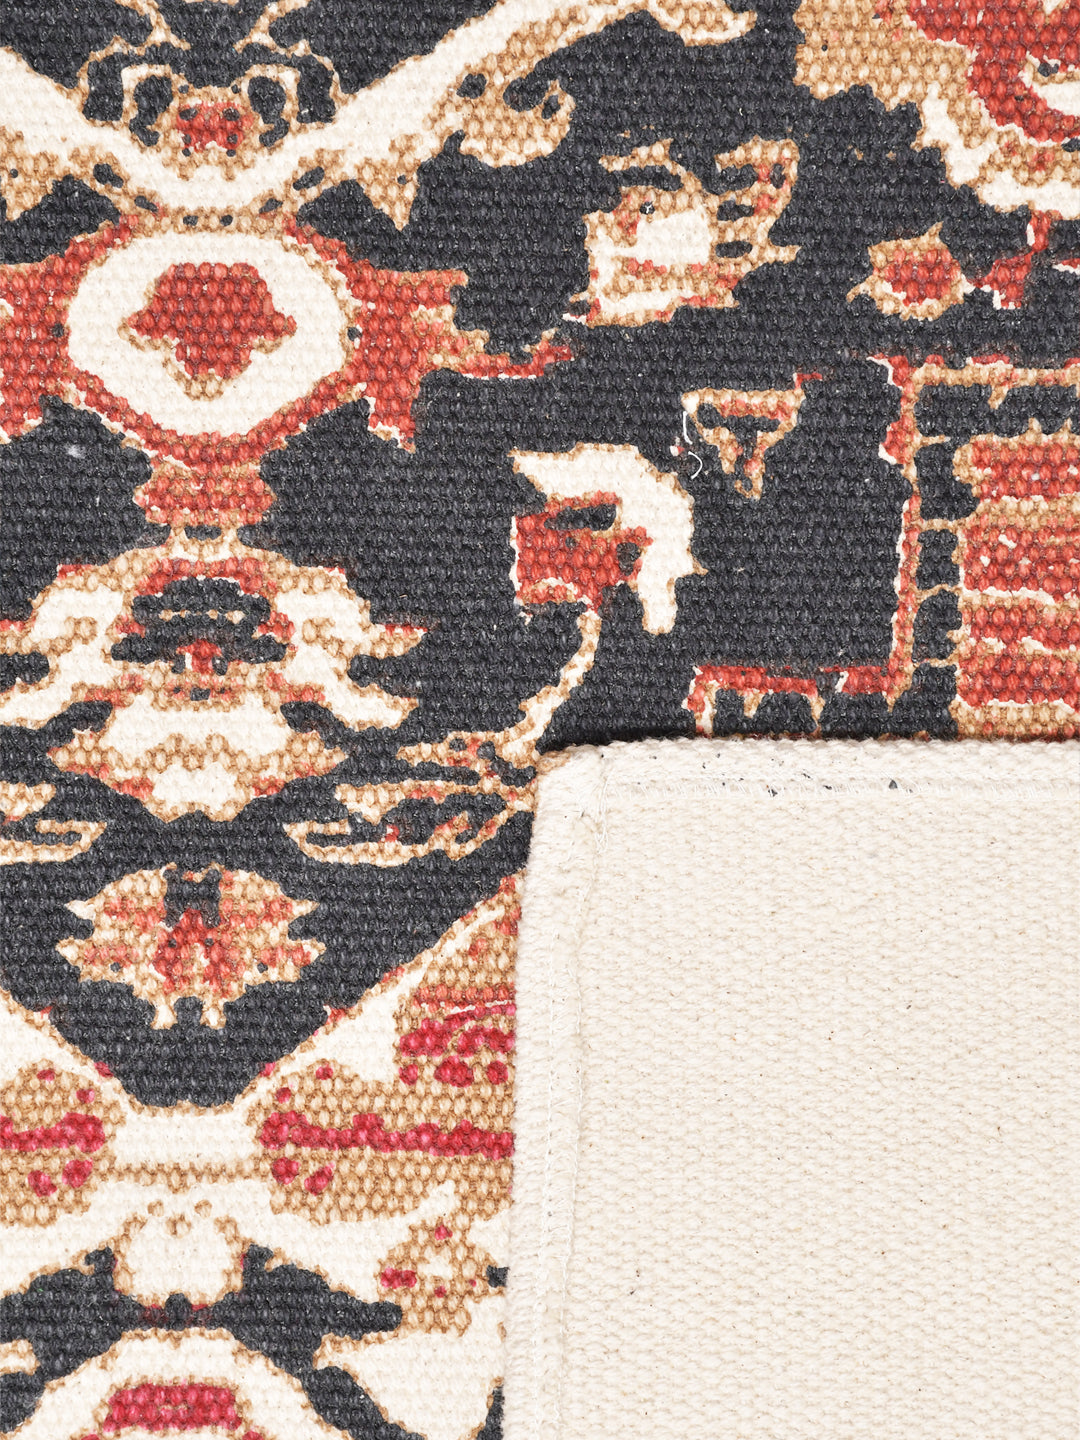 Blanc9 Jodhpur Rusty Red 4'x5.5' Printed Cotton Carpet